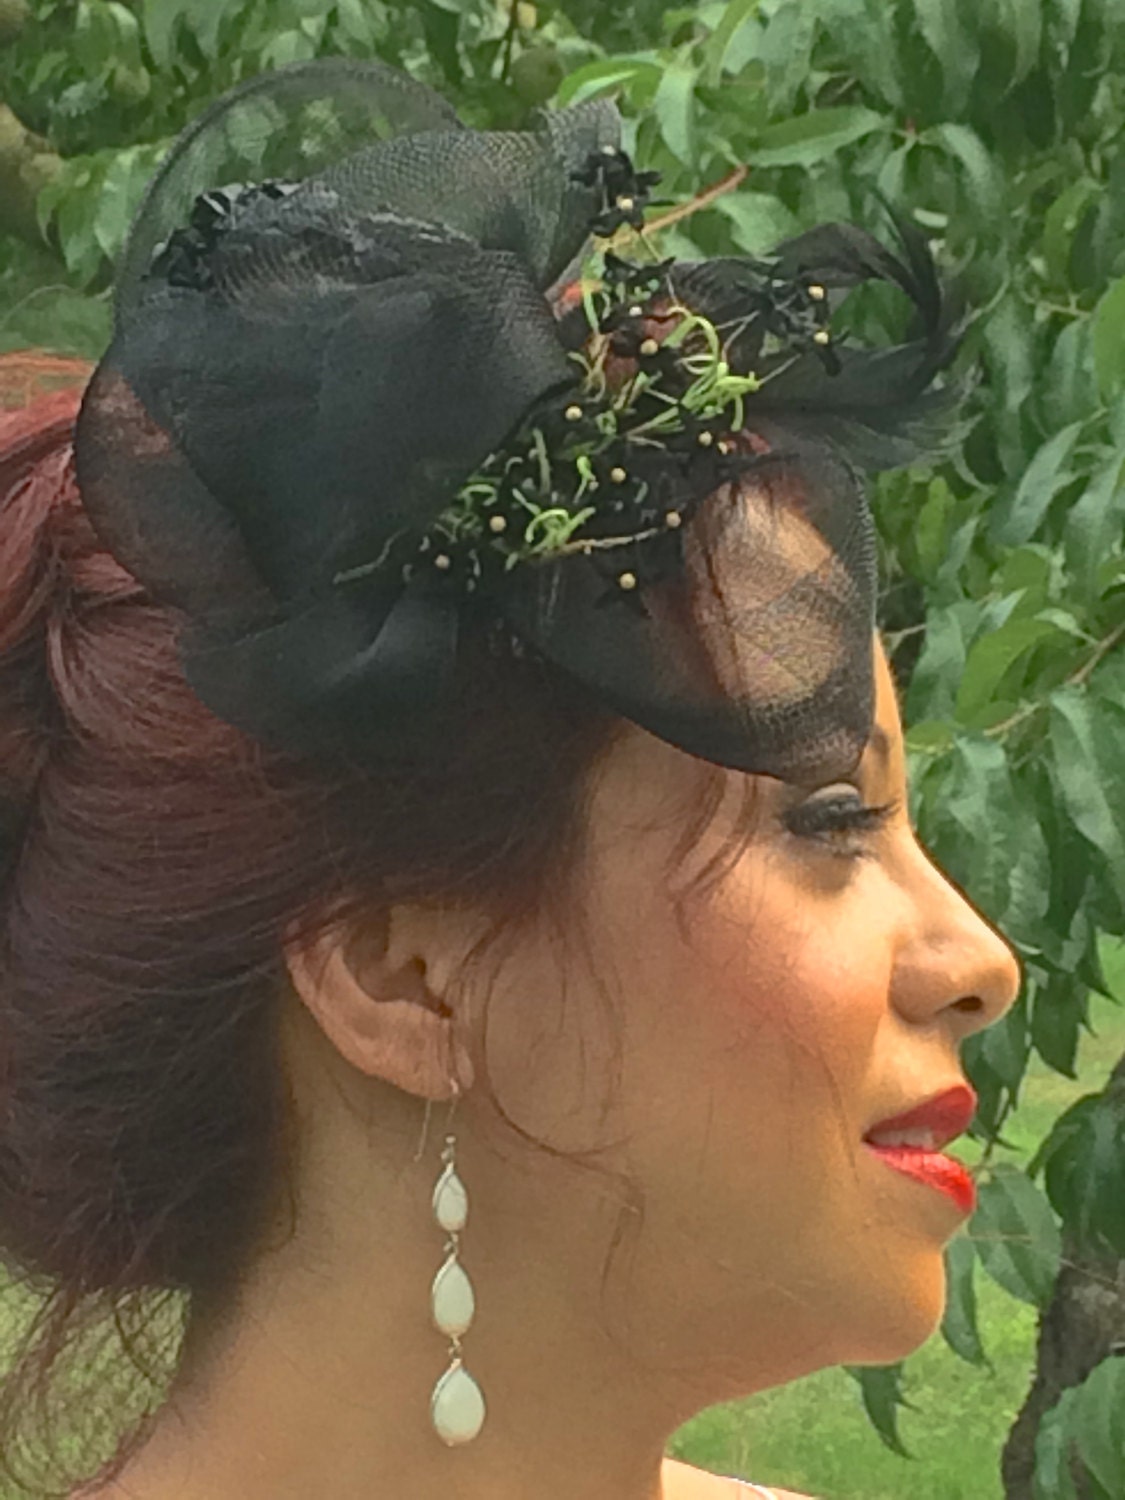 Black headpiece on comb, Black Flower headpiece, black vintage floral headpiece with Crinoline and Vintage Straw Braid-Evening hairpiece-